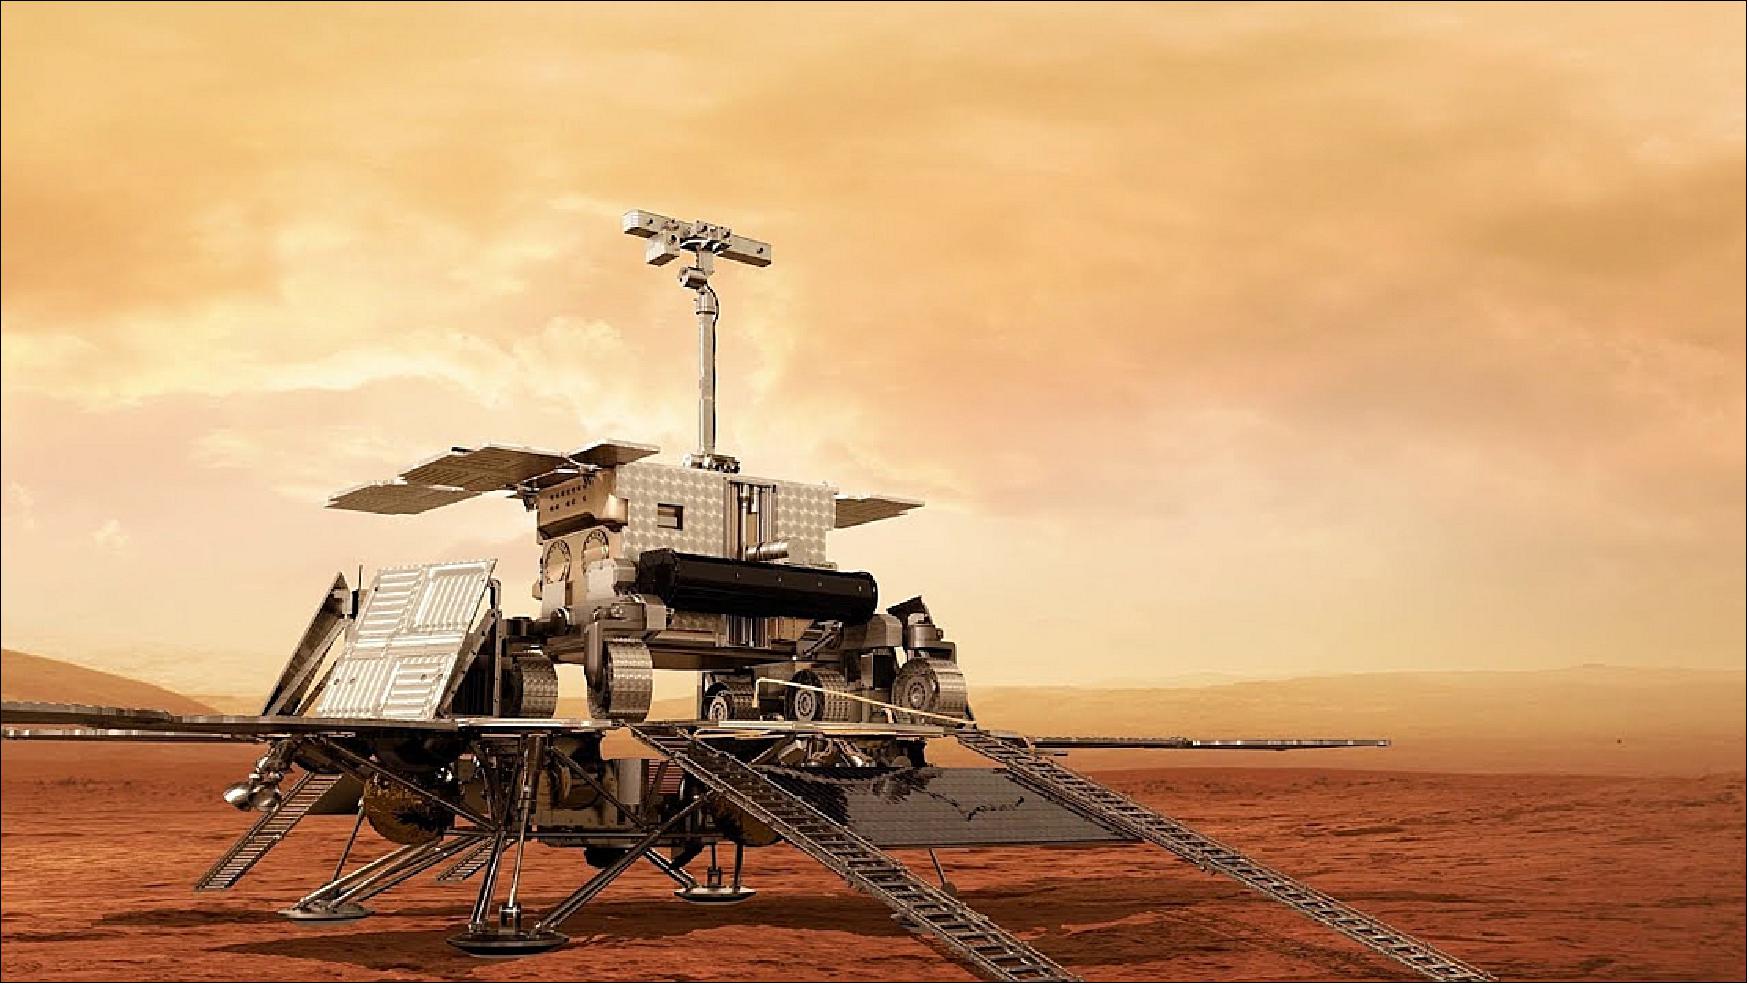 Figure 62: ExoMars 2020 rover atop its Surface Platform (image credit: ESA)